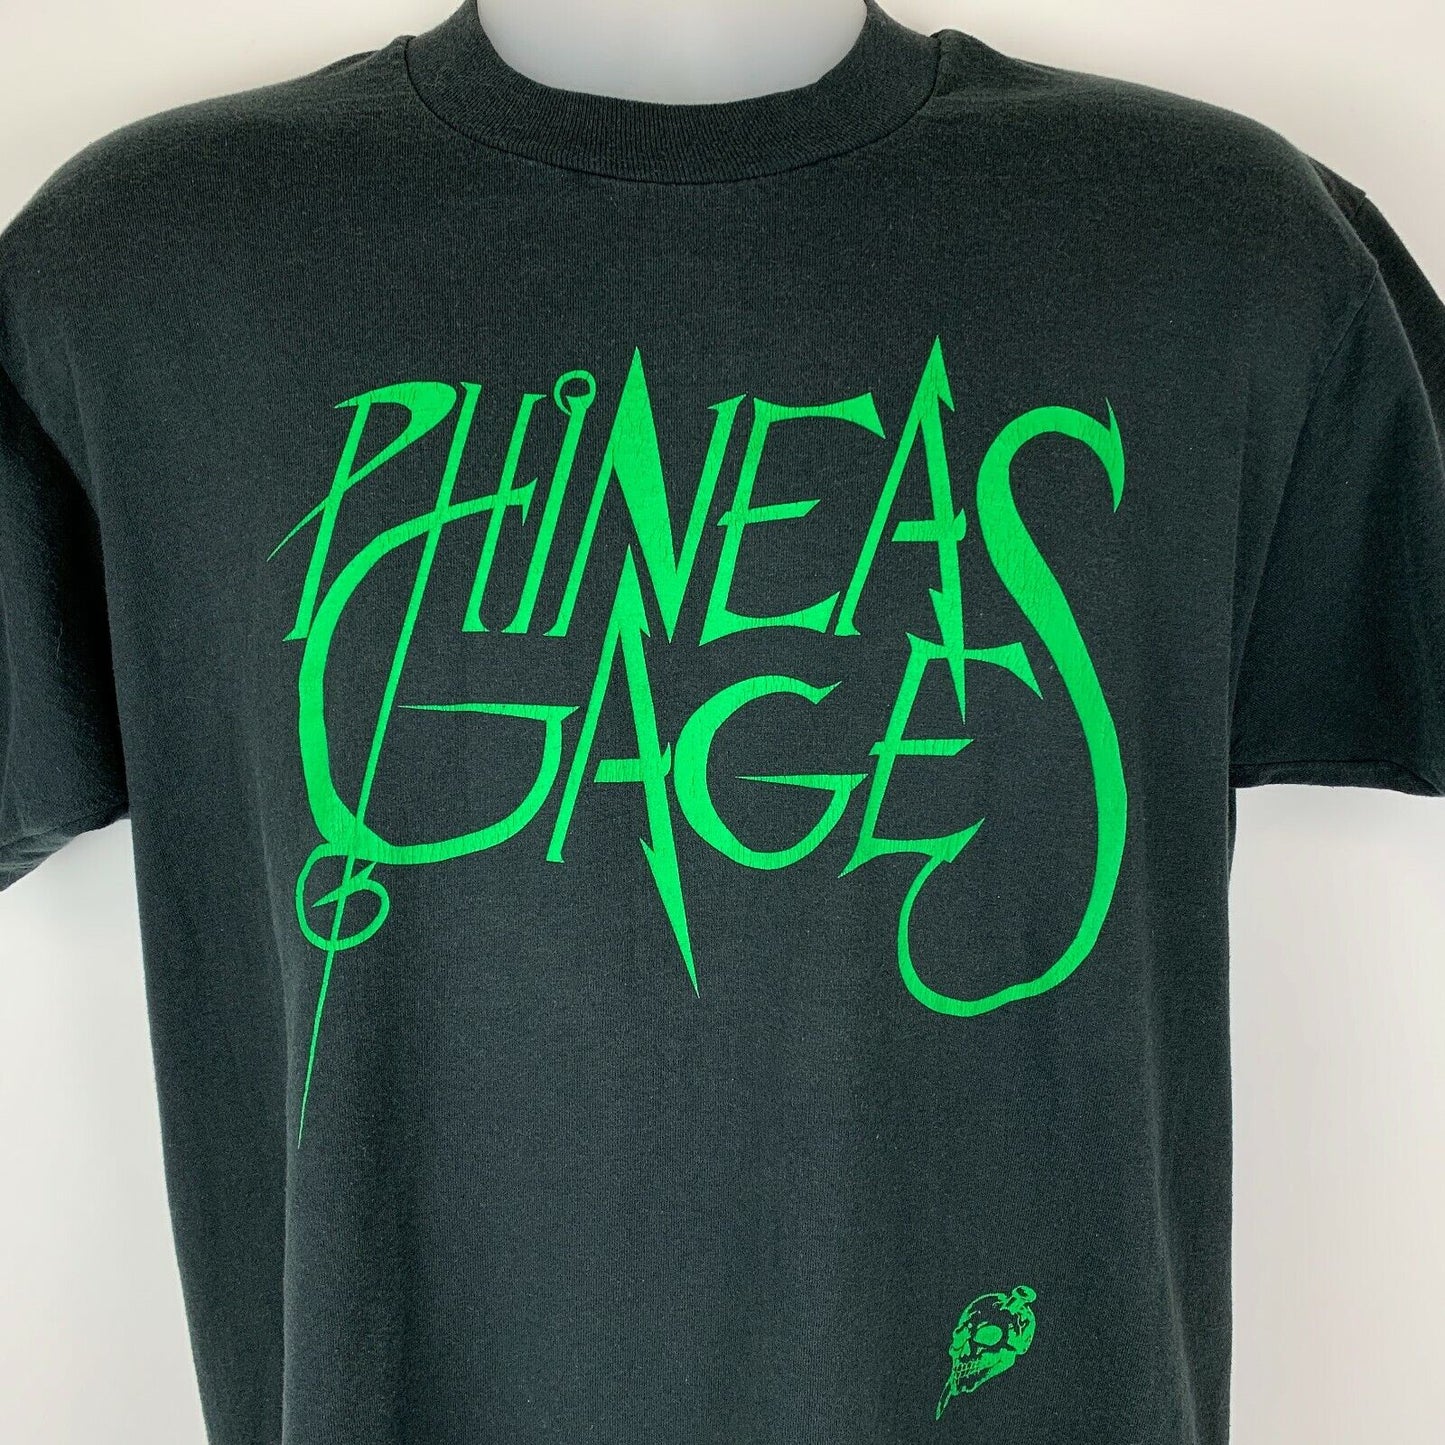 Phineas Gage Vintage 90s T Shirt Large Arizona Heavy Metal Band USA Mens Black